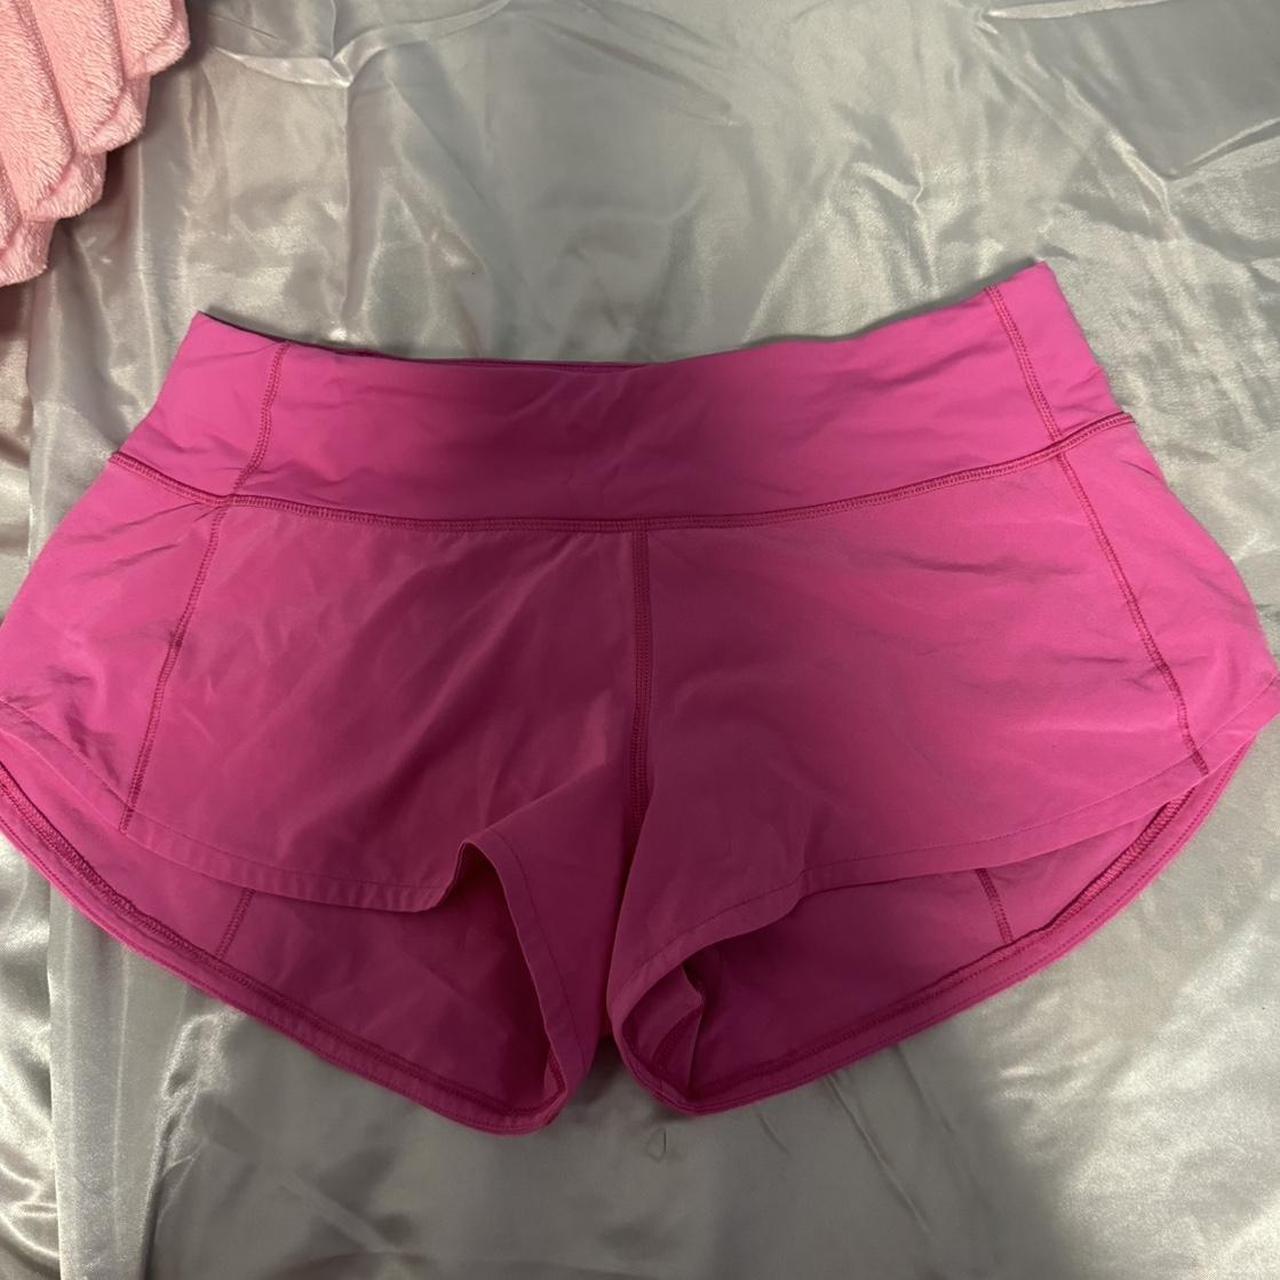 sonic pink lulu lemon speed up shorts 2.5” never... - Depop